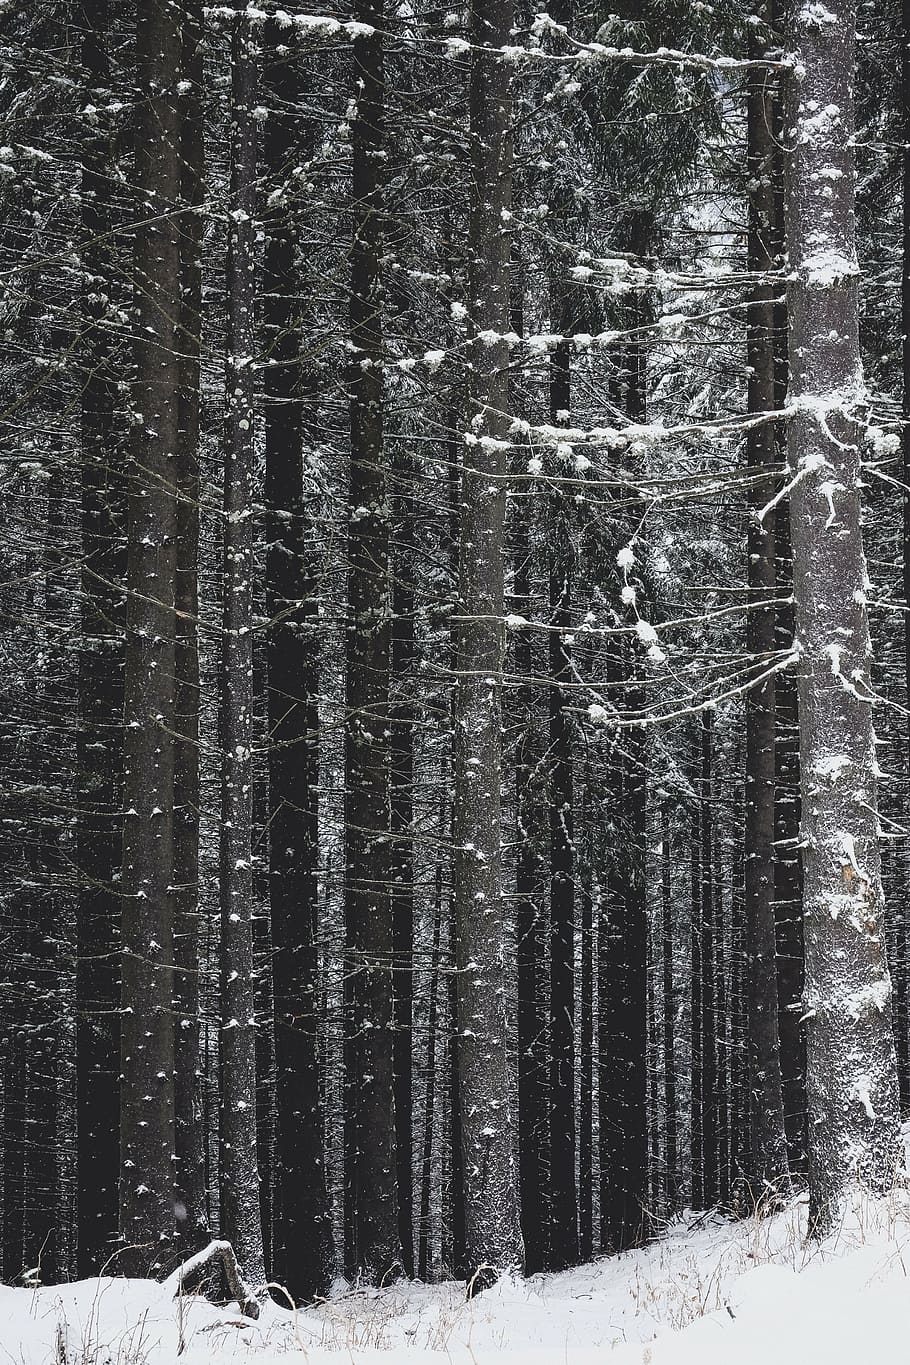 neve, coberto, nu, árvores, inverno, branco, frio, clima, gelo, plantas